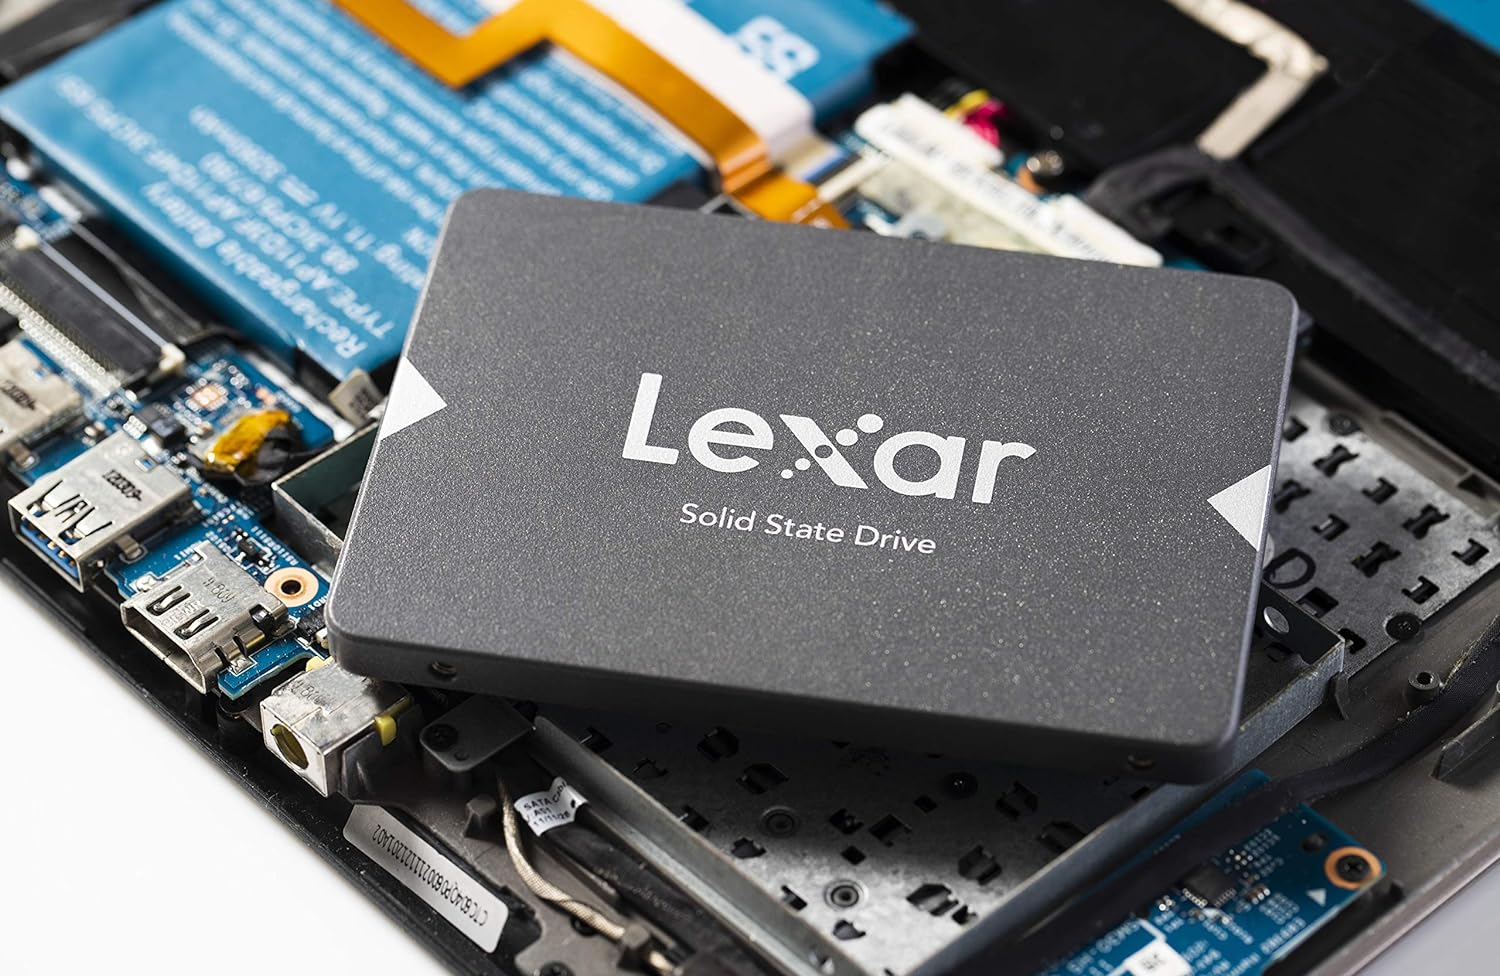 Lexar NS100 512GB 2.5” (SATA 6Gb/s SSD,) Solid State Drive, Up to 550MB/s Read (LNS100-512RB)